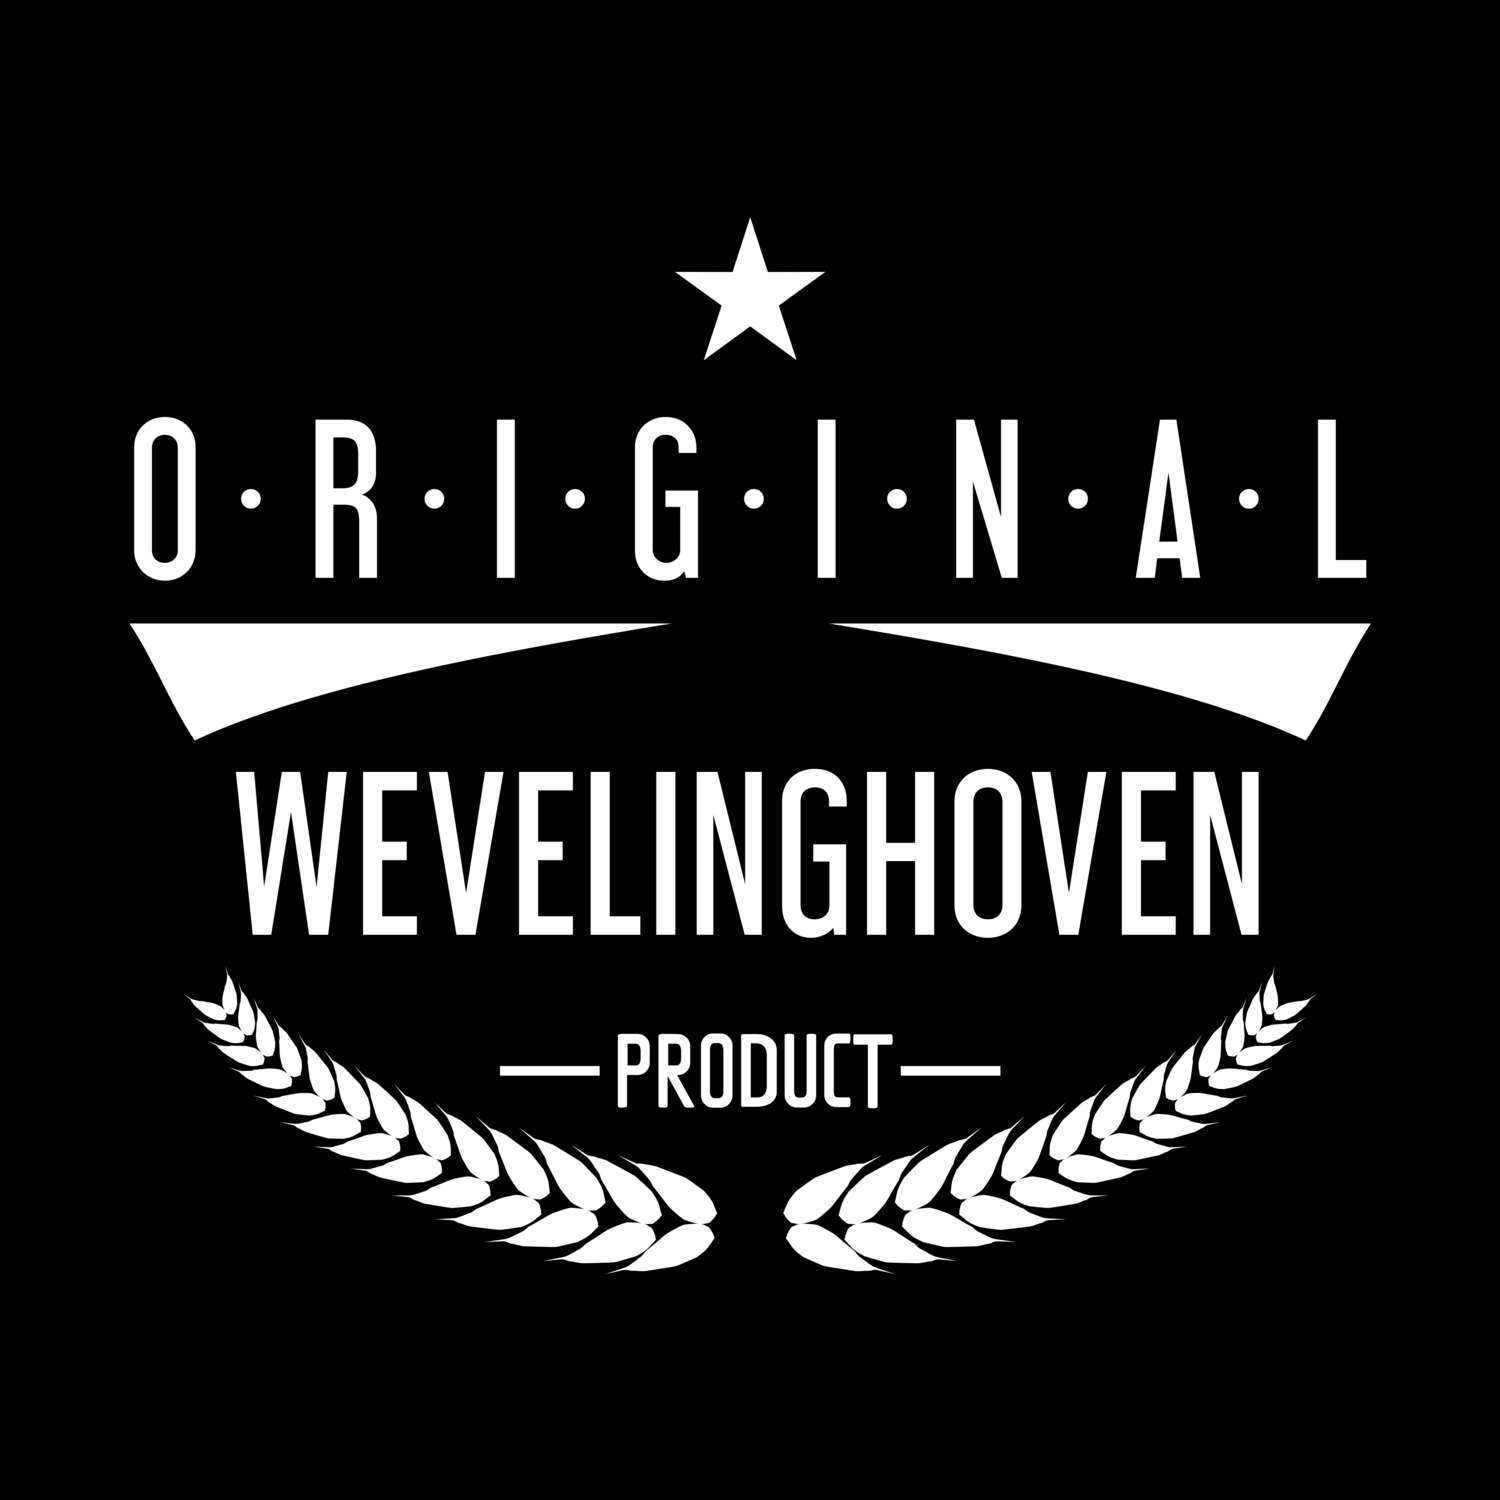 Wevelinghoven T-Shirt »Original Product«